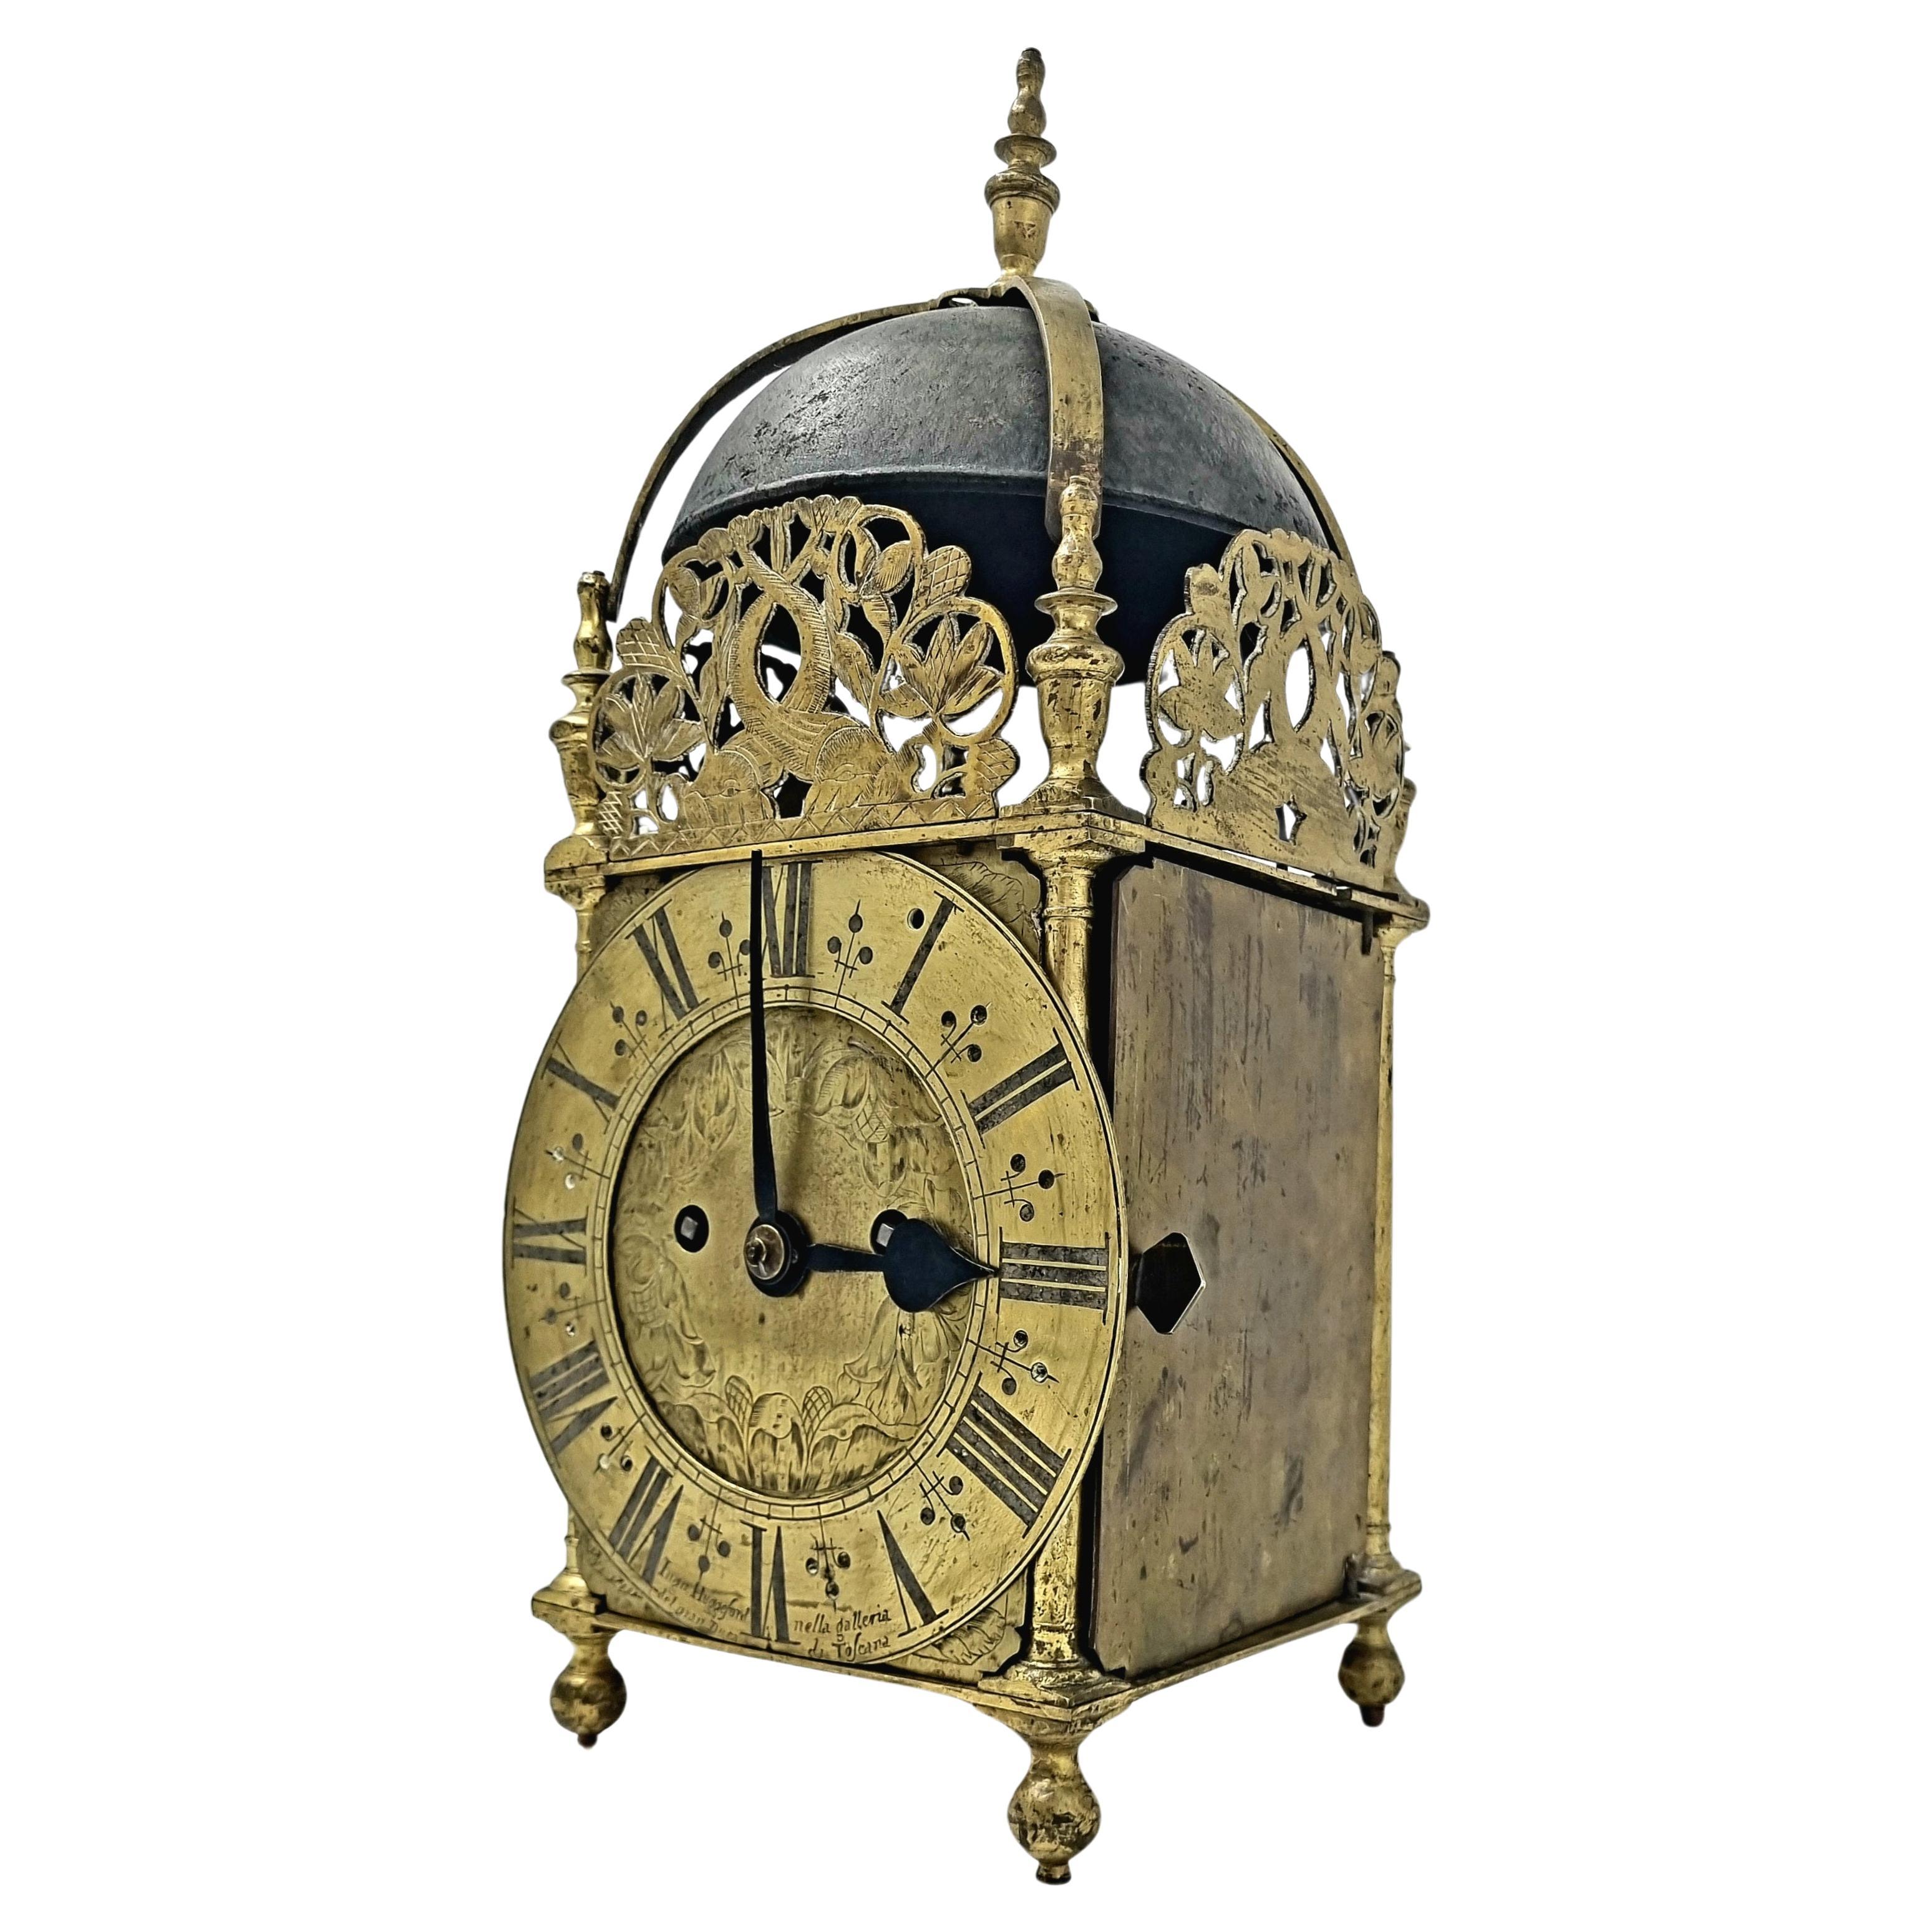 Horloge lanterne anglaise du 17e siècle par Ignatius Huggeford en vente